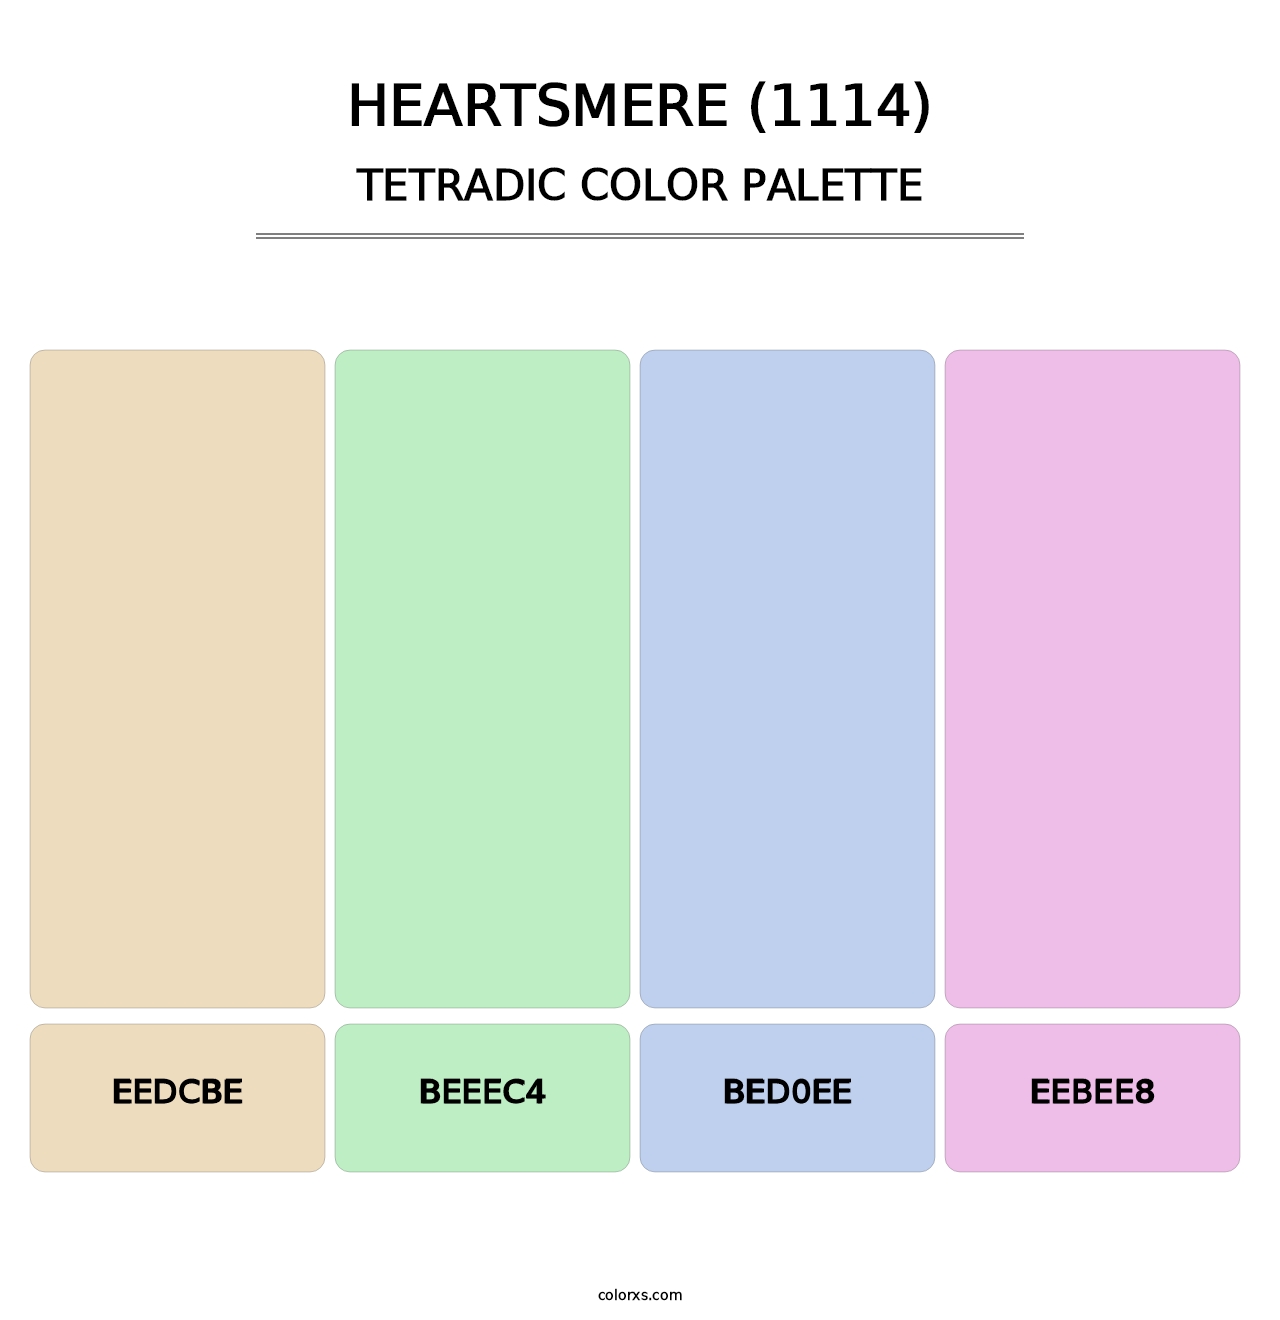 Heartsmere (1114) - Tetradic Color Palette